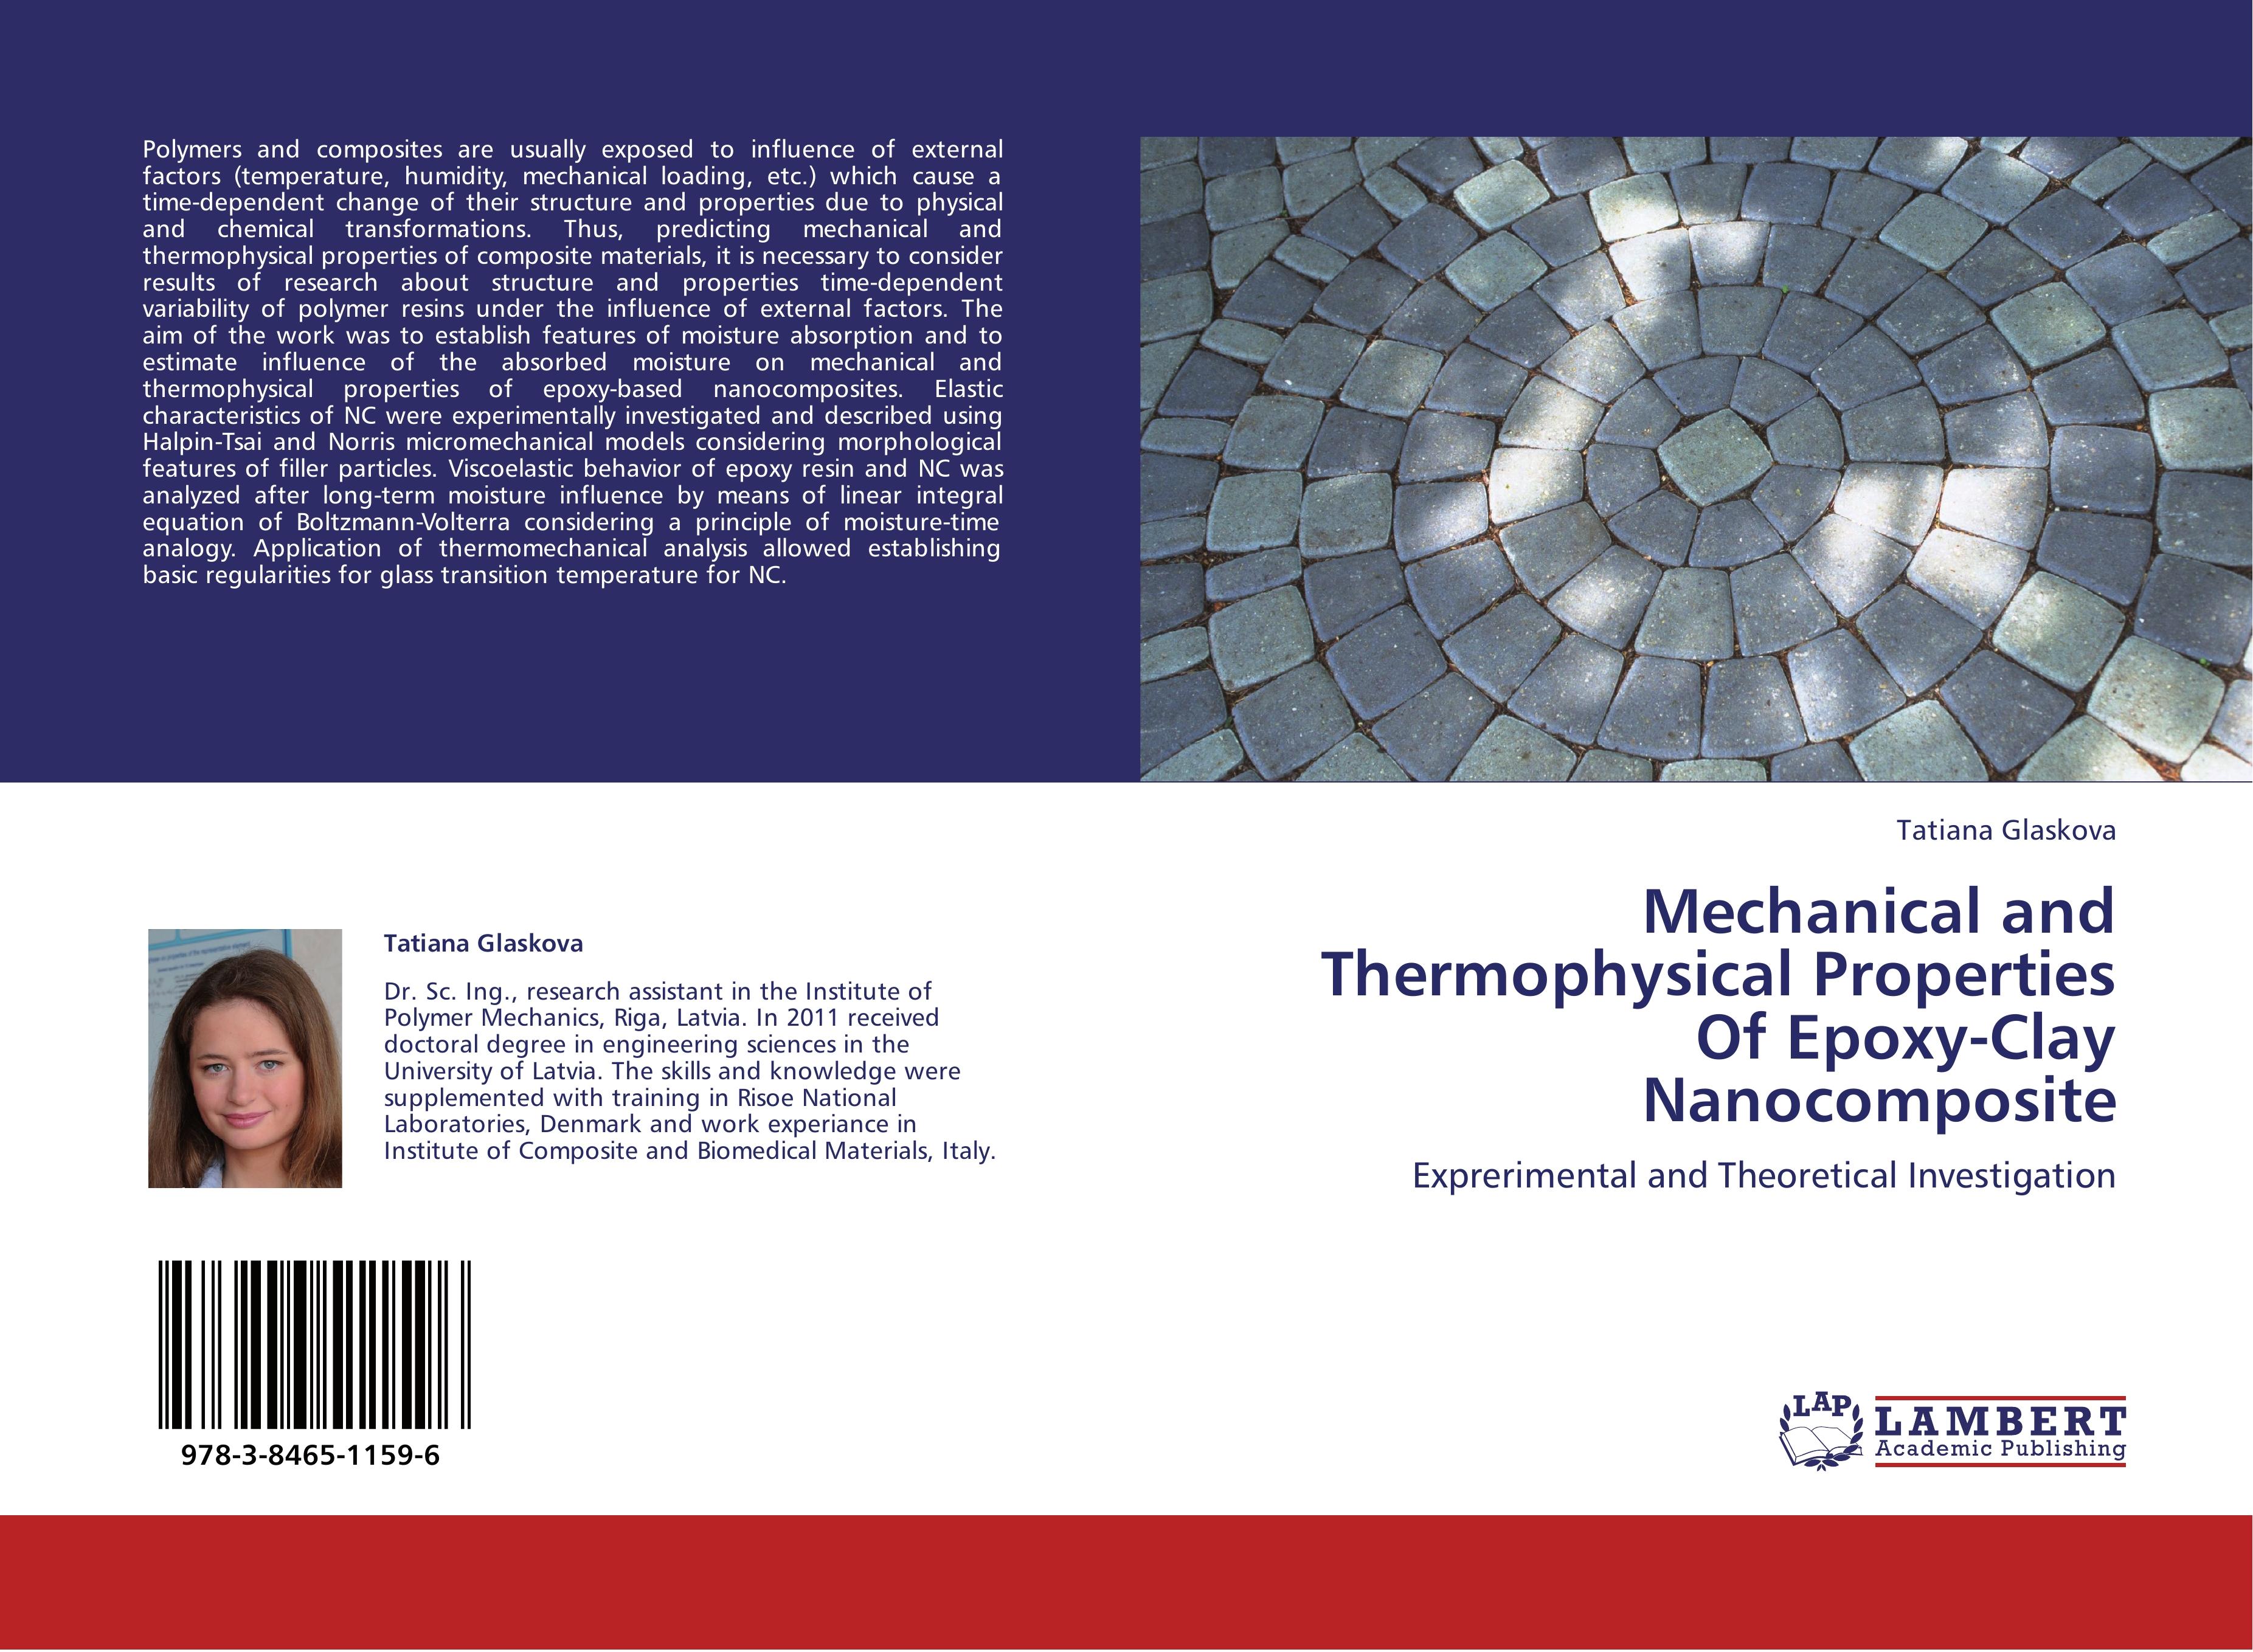 Mechanical and Thermophysical Properties Of Epoxy-Clay Nanocomposite / Exprerimental and Theoretical Investigation / Tatiana Glaskova / Taschenbuch / Paperback / 60 S. / Englisch / 2011 - Glaskova, Tatiana